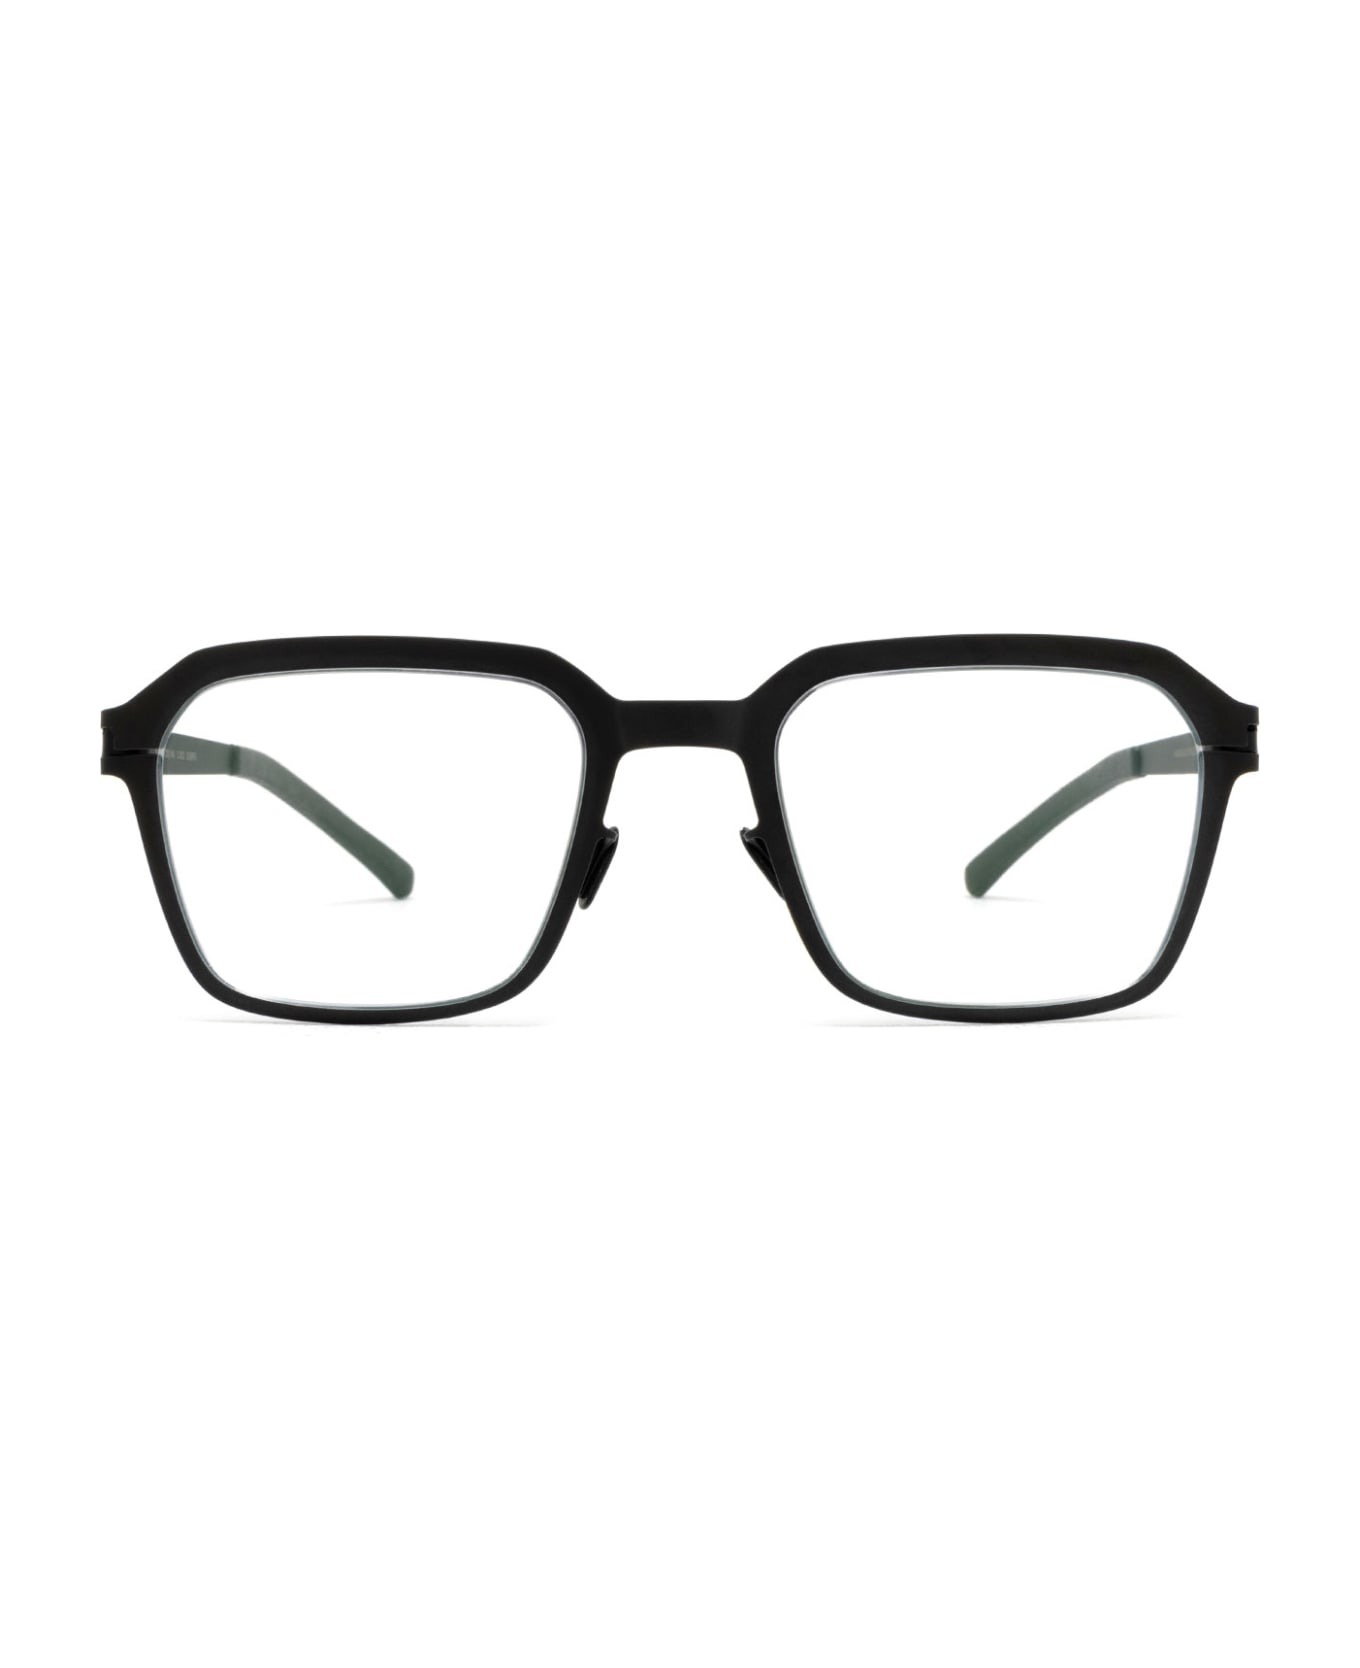 Mykita Garland Black Glasses - Black アイウェア